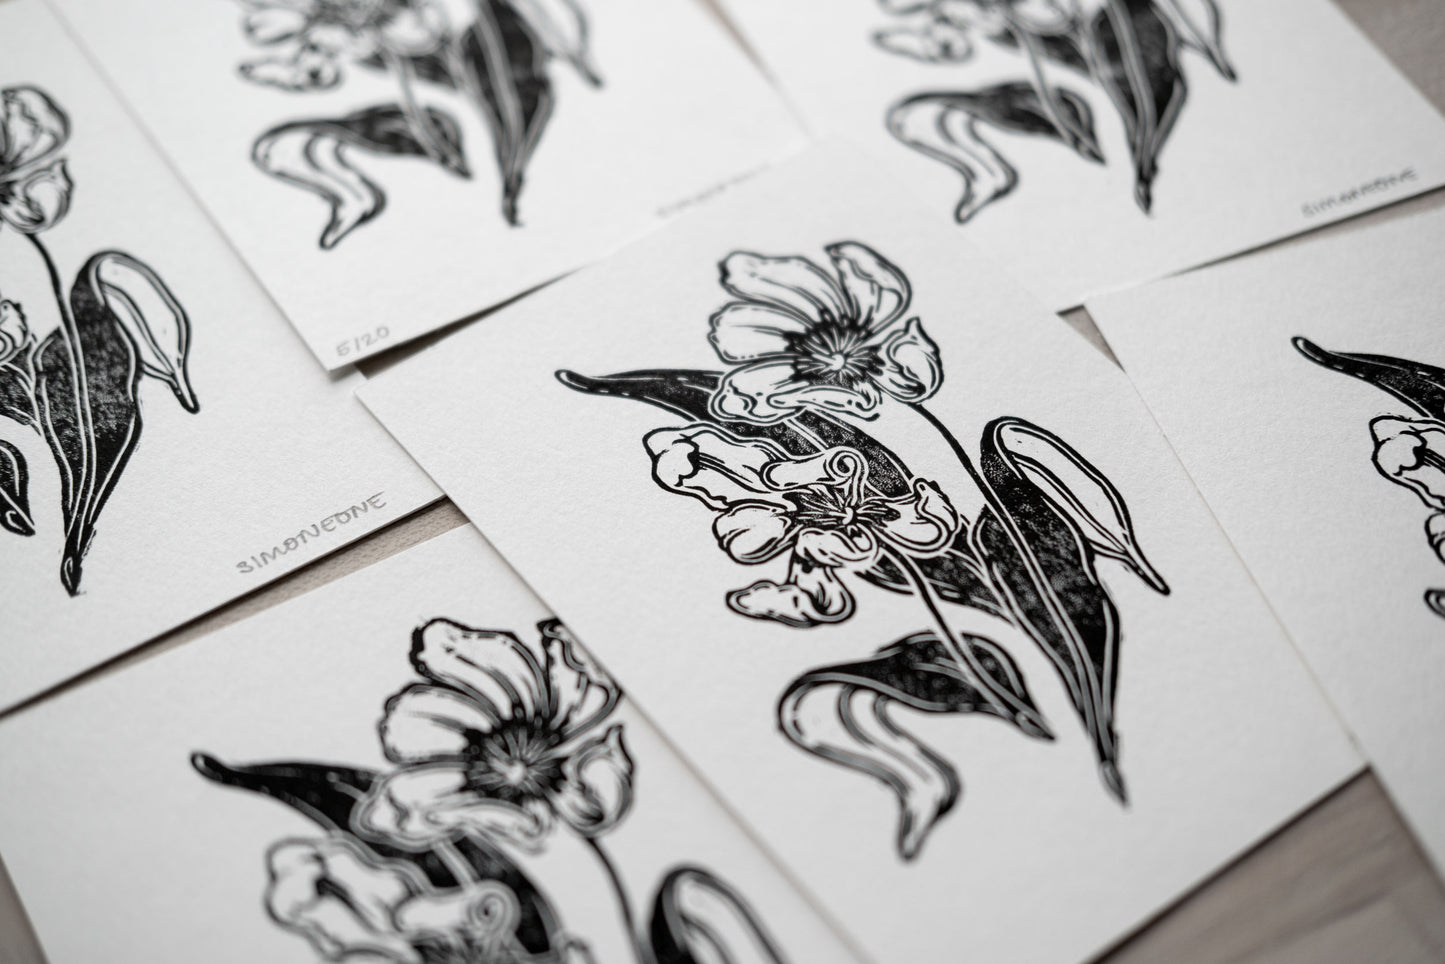 "Tulips" Linocut Print